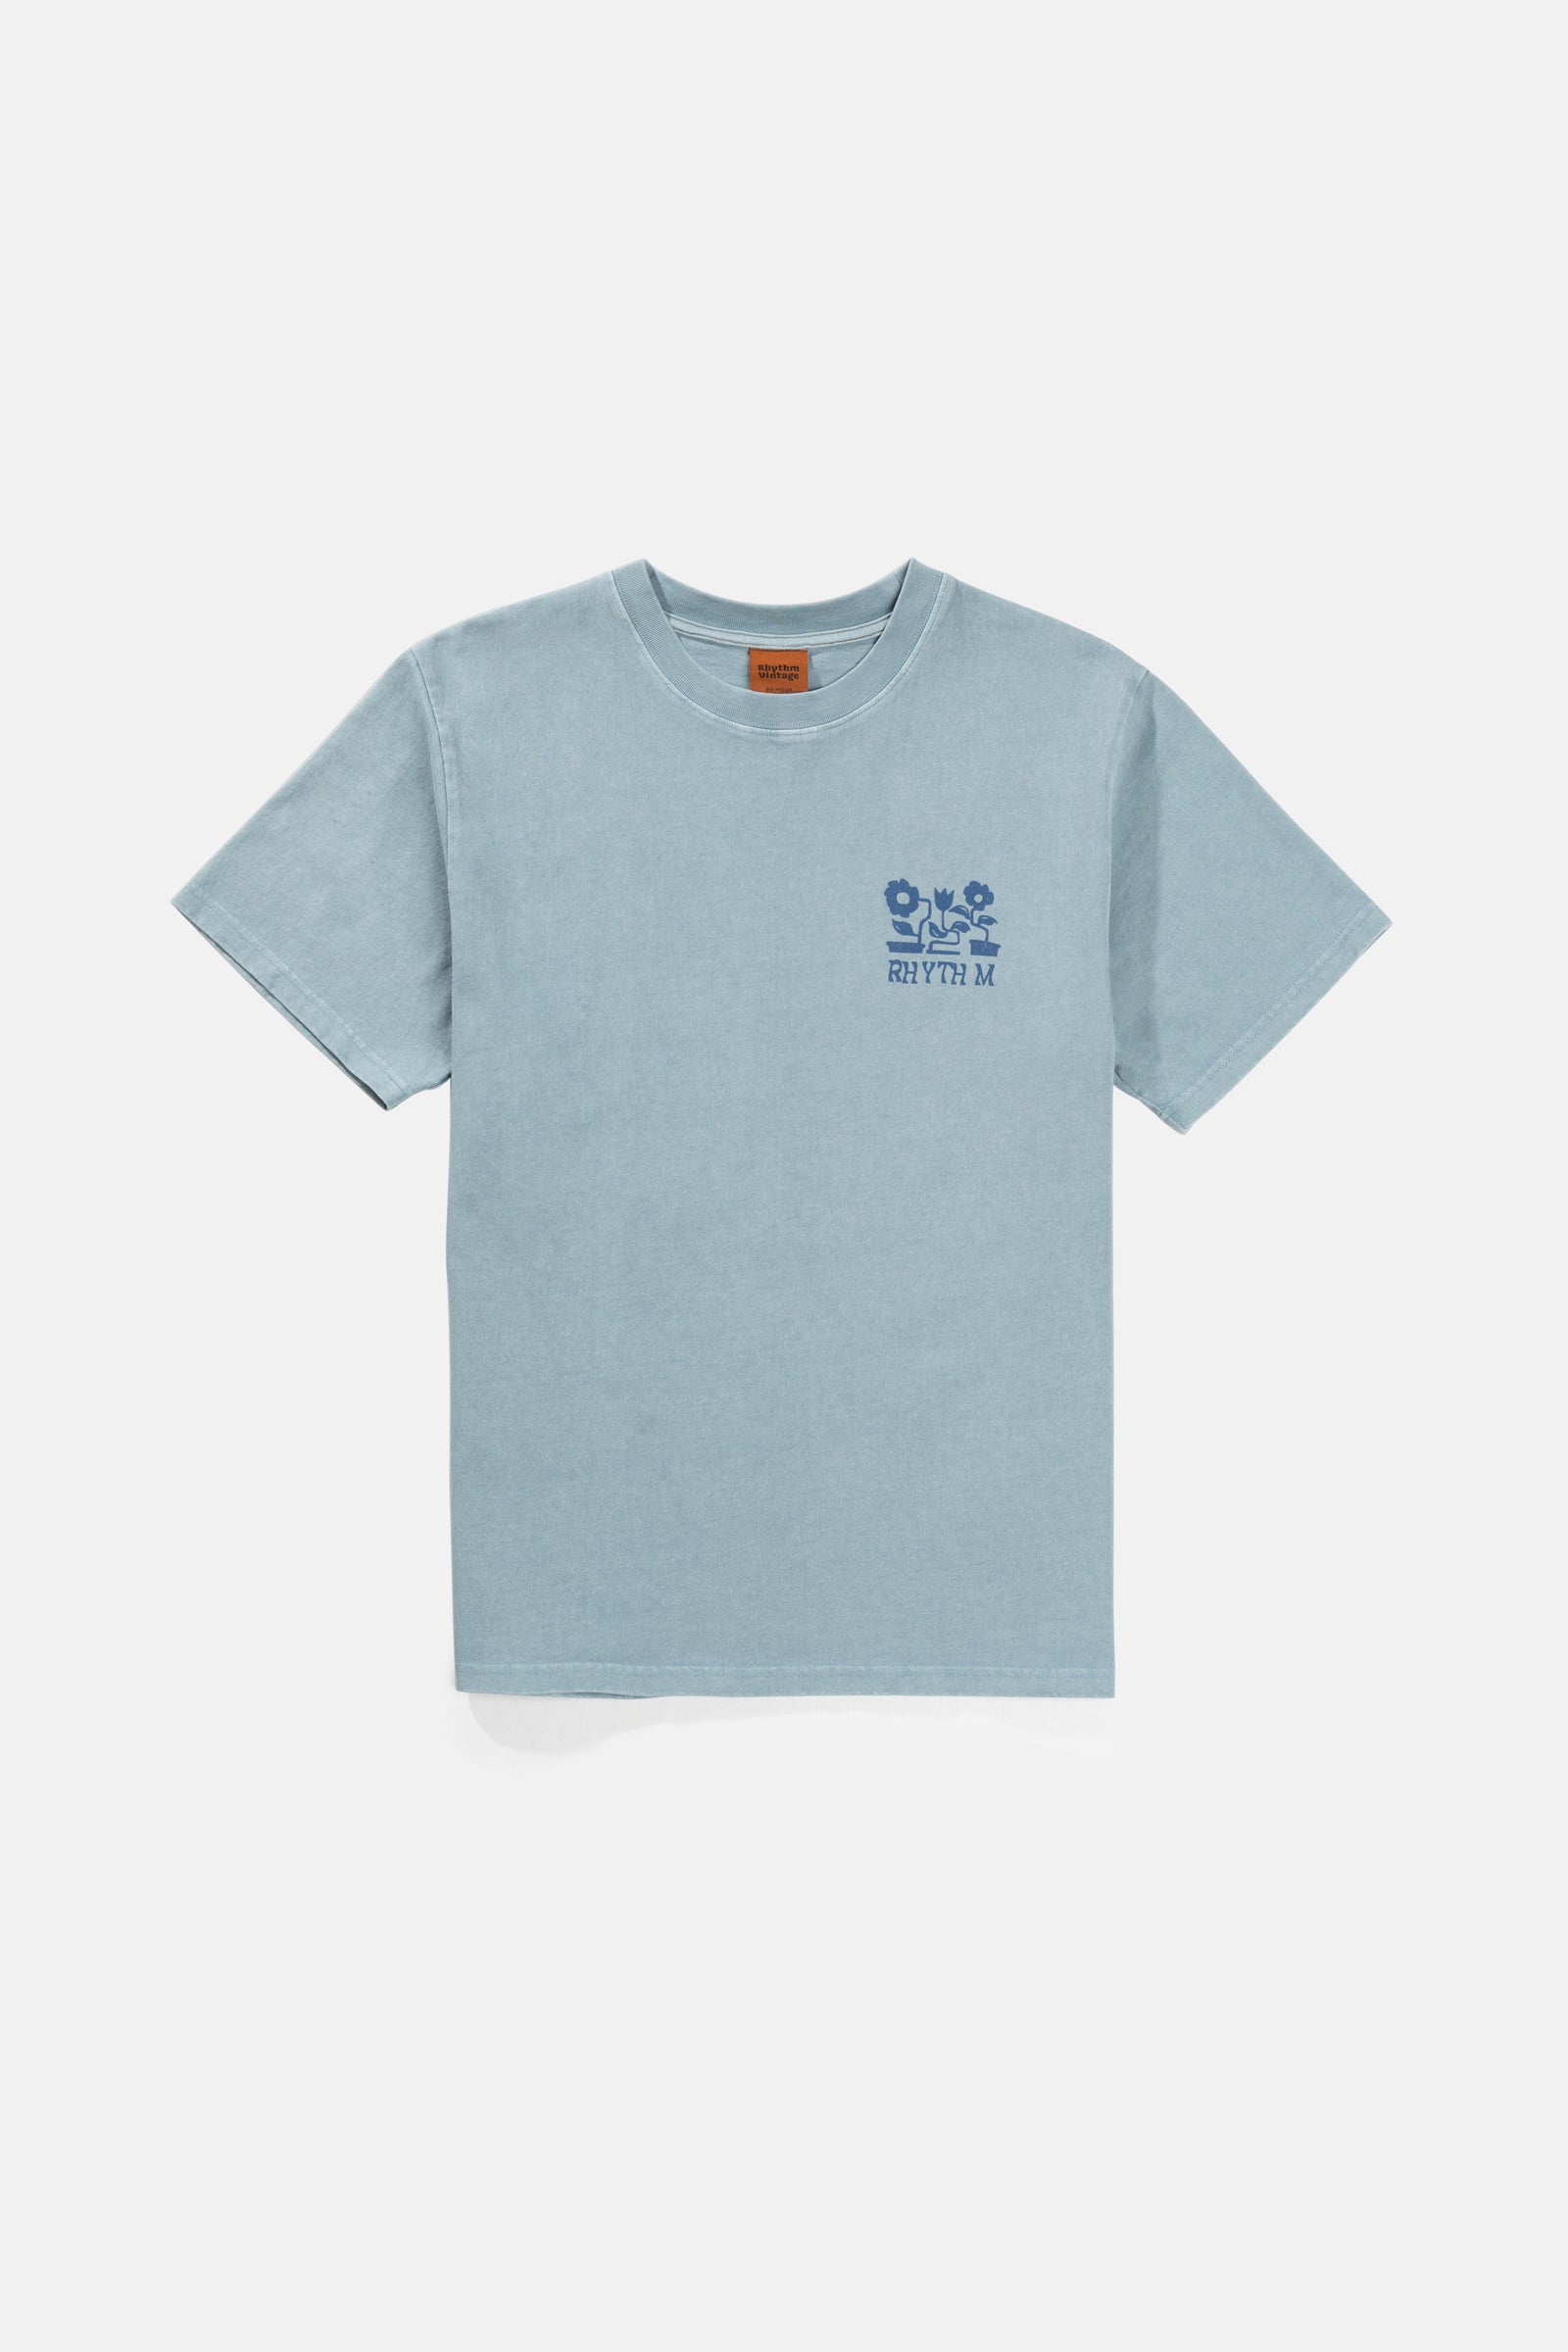 Flower Vintage SS T-Shirt- Blue Fog